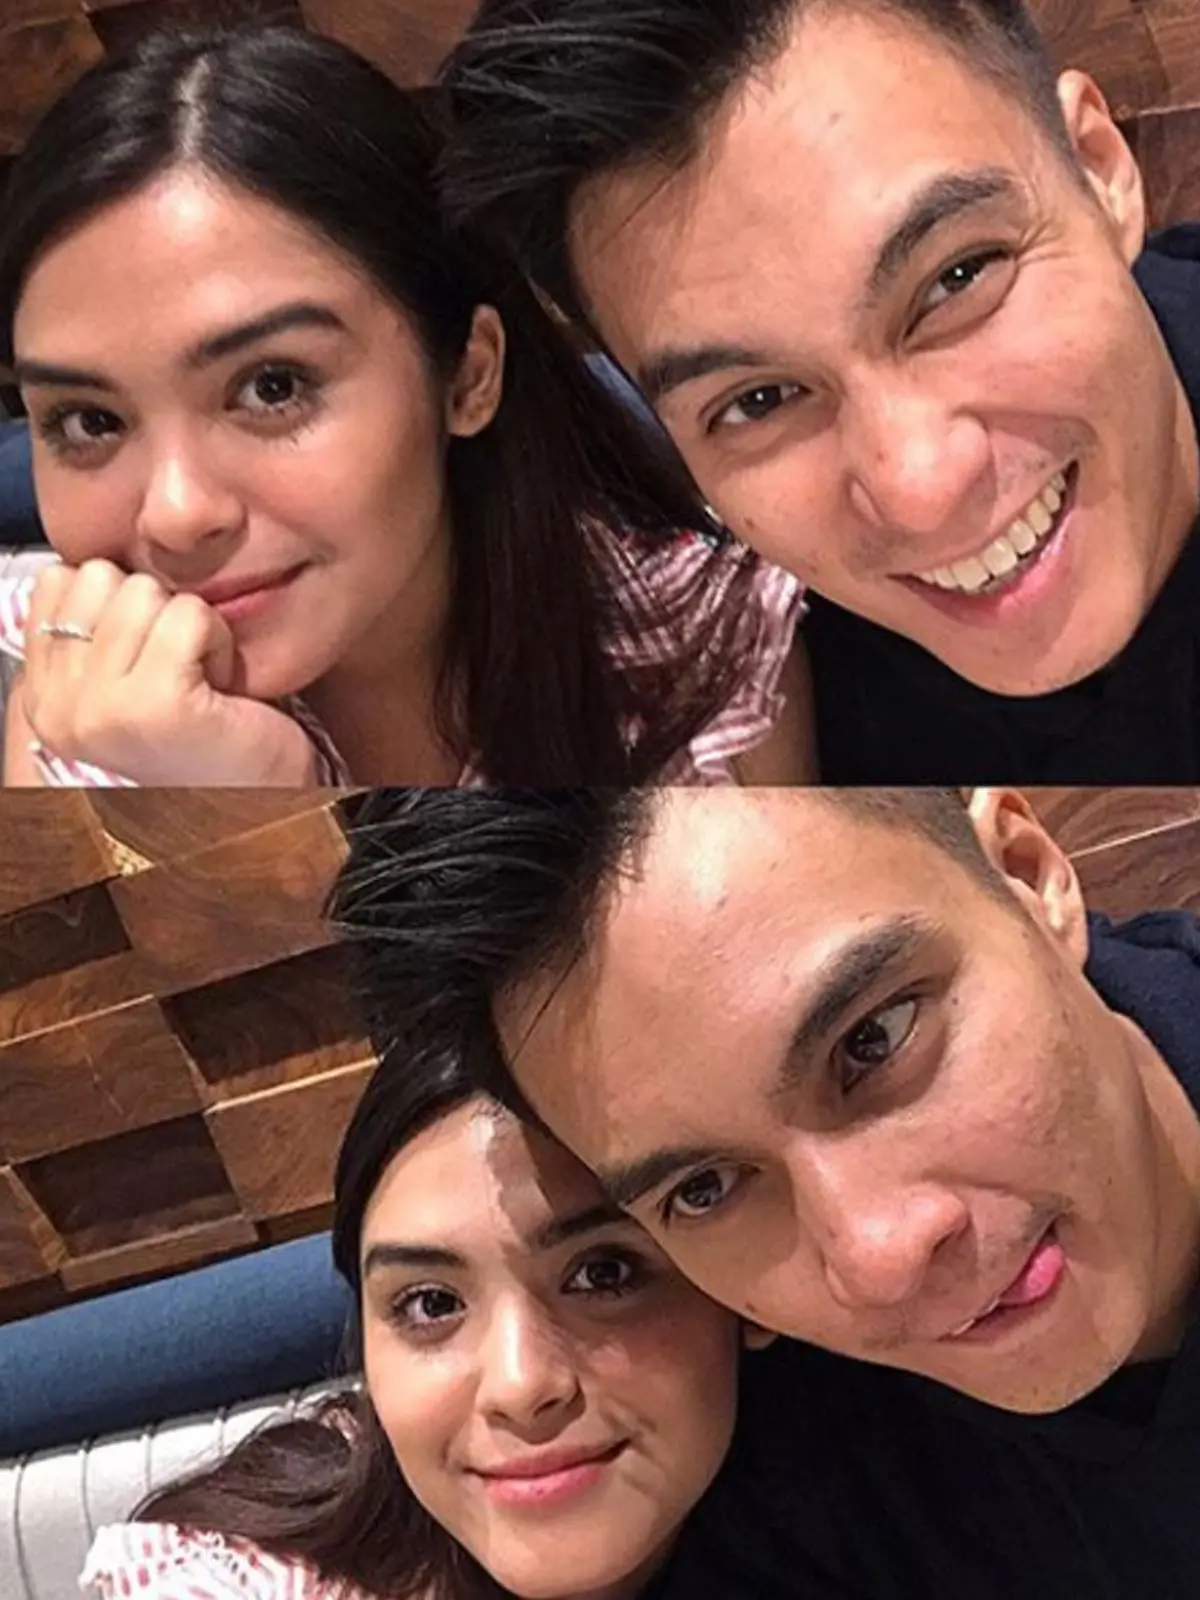 Baim Wong dan Vebby Palwinta (Instagram)